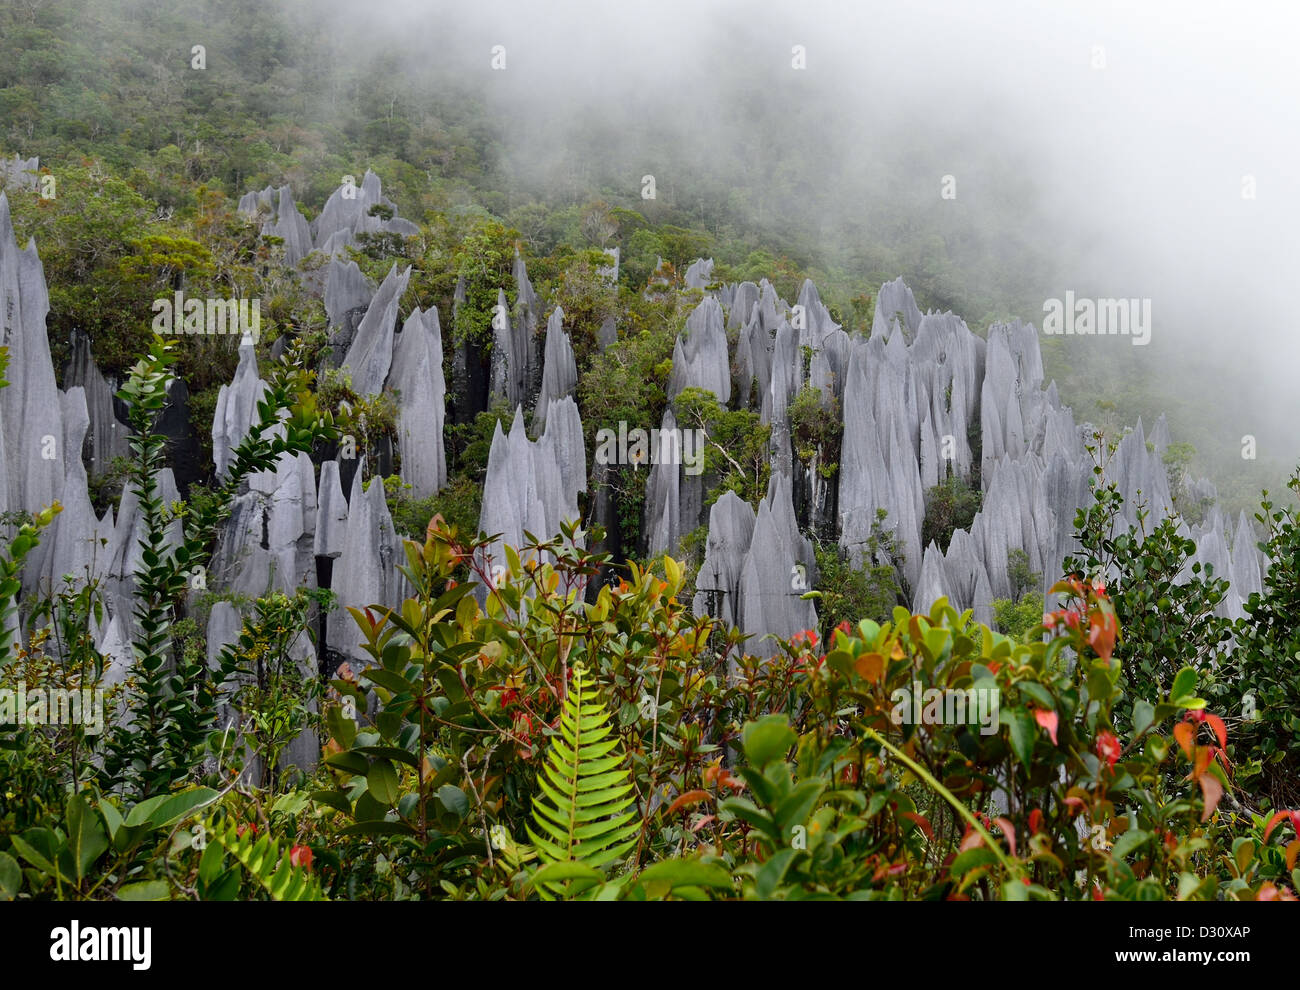 Kalkstein Pinnacles Mount API, Gunung Mulu National Park. Sarawak, Borneo, Malaysia. Stockfoto